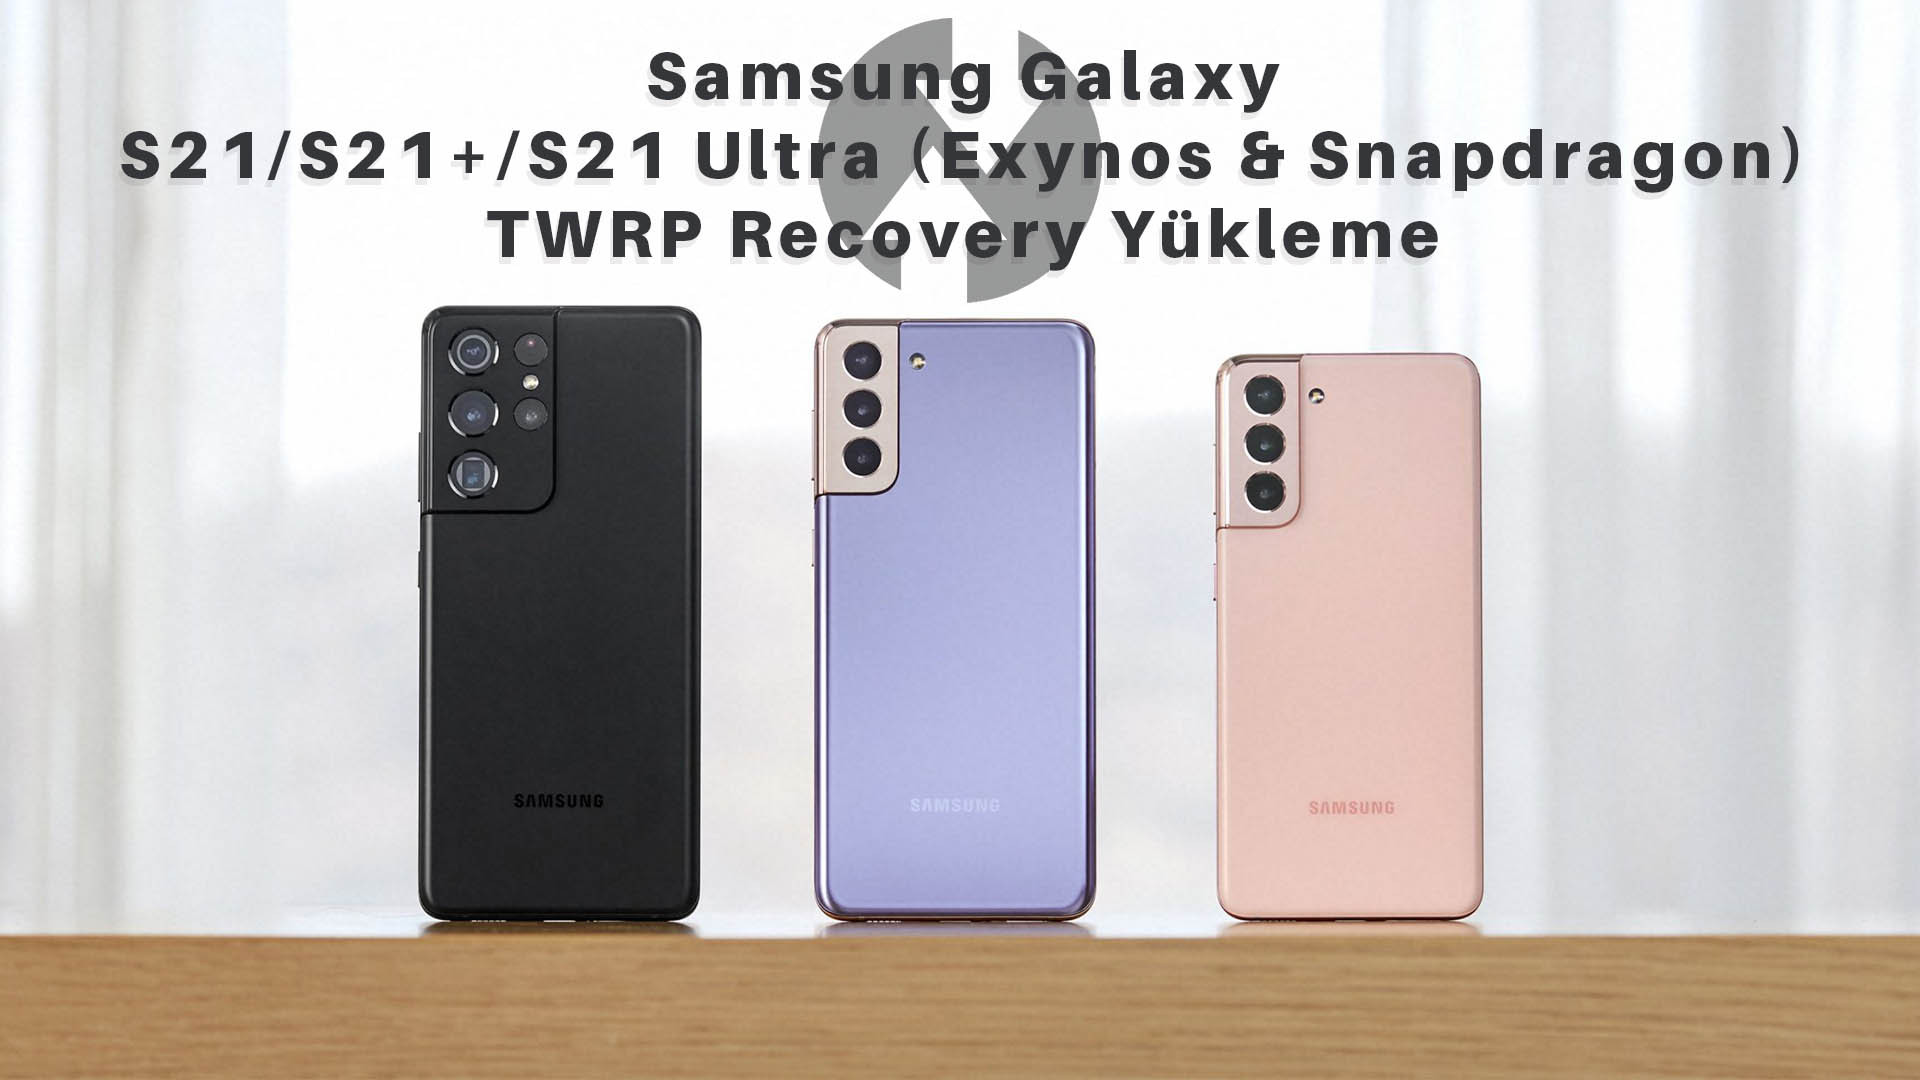 Samsung Galaxy S21/S21+/S21 Ultra (Exynos & Snapdragon) TWRP Recovery Yükleme twrp yükleme twrp install samsung s21 ultra s21 plus s21 galaxy 